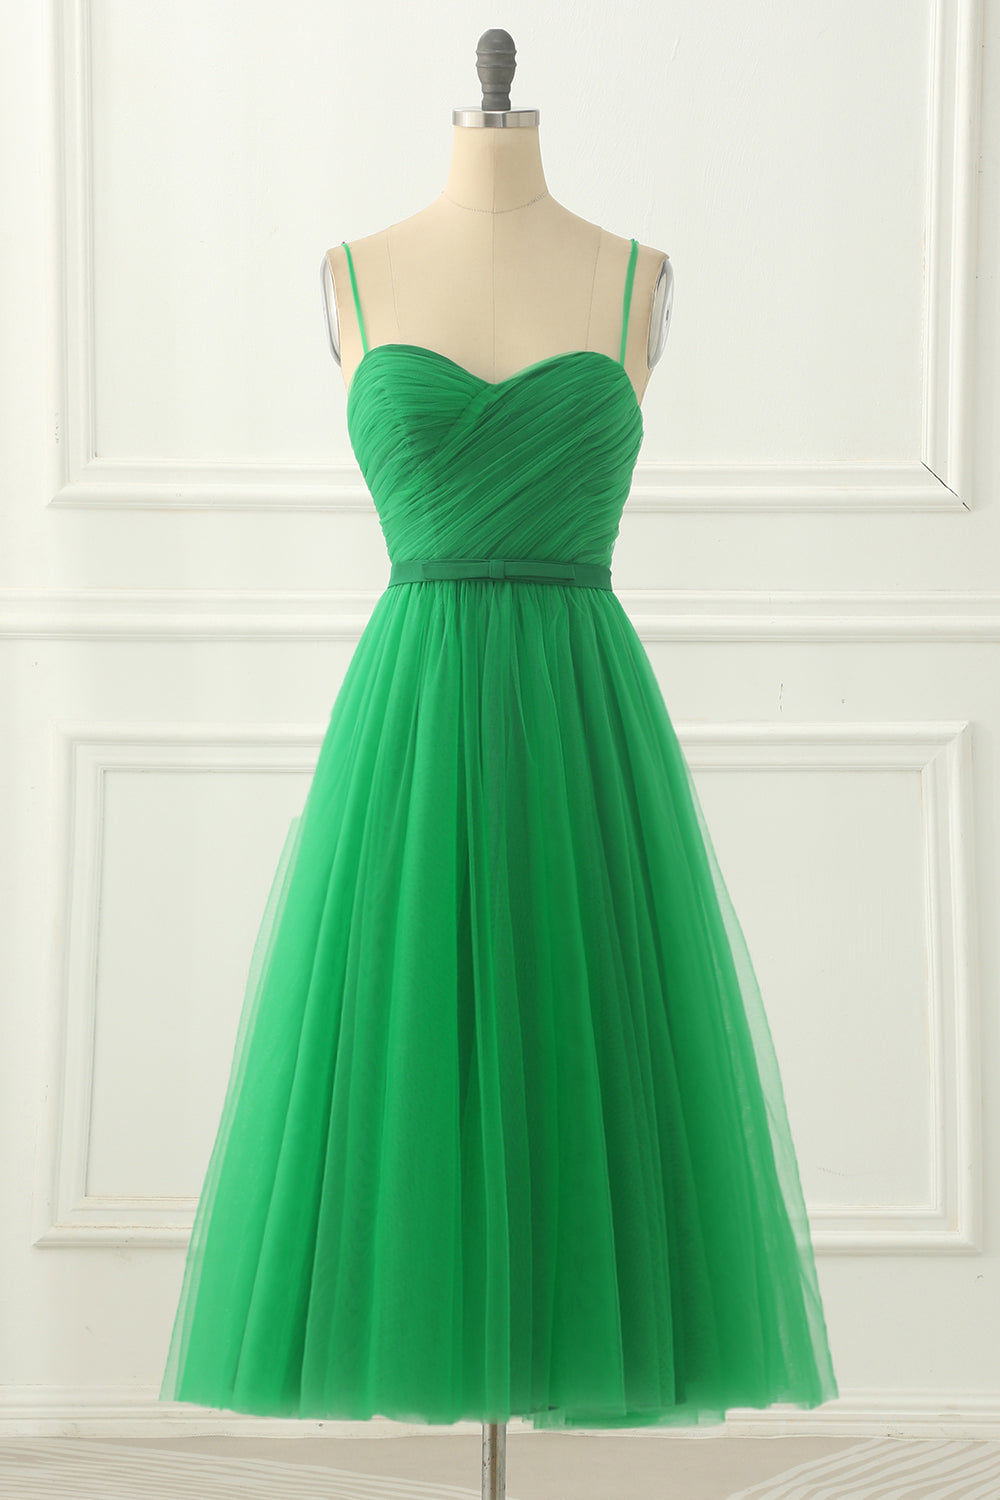 Pretty Prom Dress, Green Spaghetti Straps Tulle Prom Dress with Sash